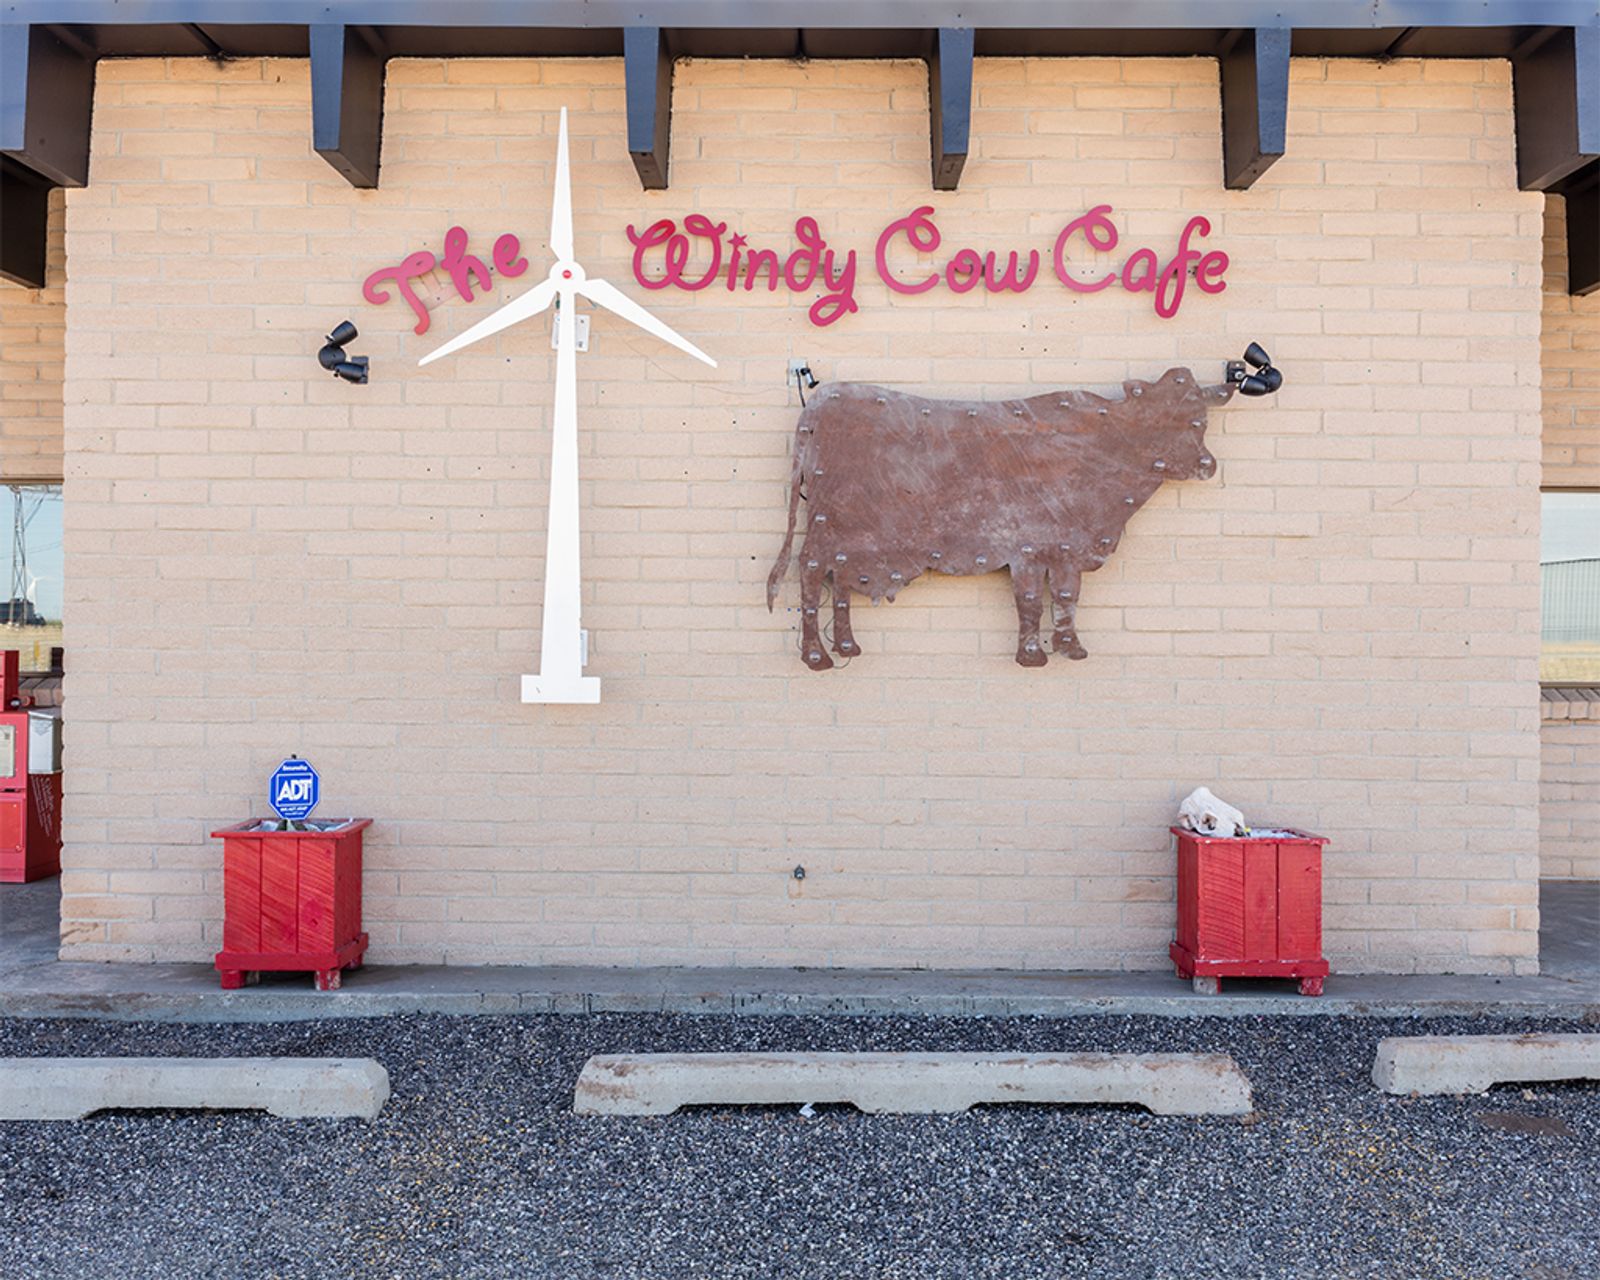 © Bryan Steiff - The Windy Cow Cafe, Wilderado, Texas, 2016